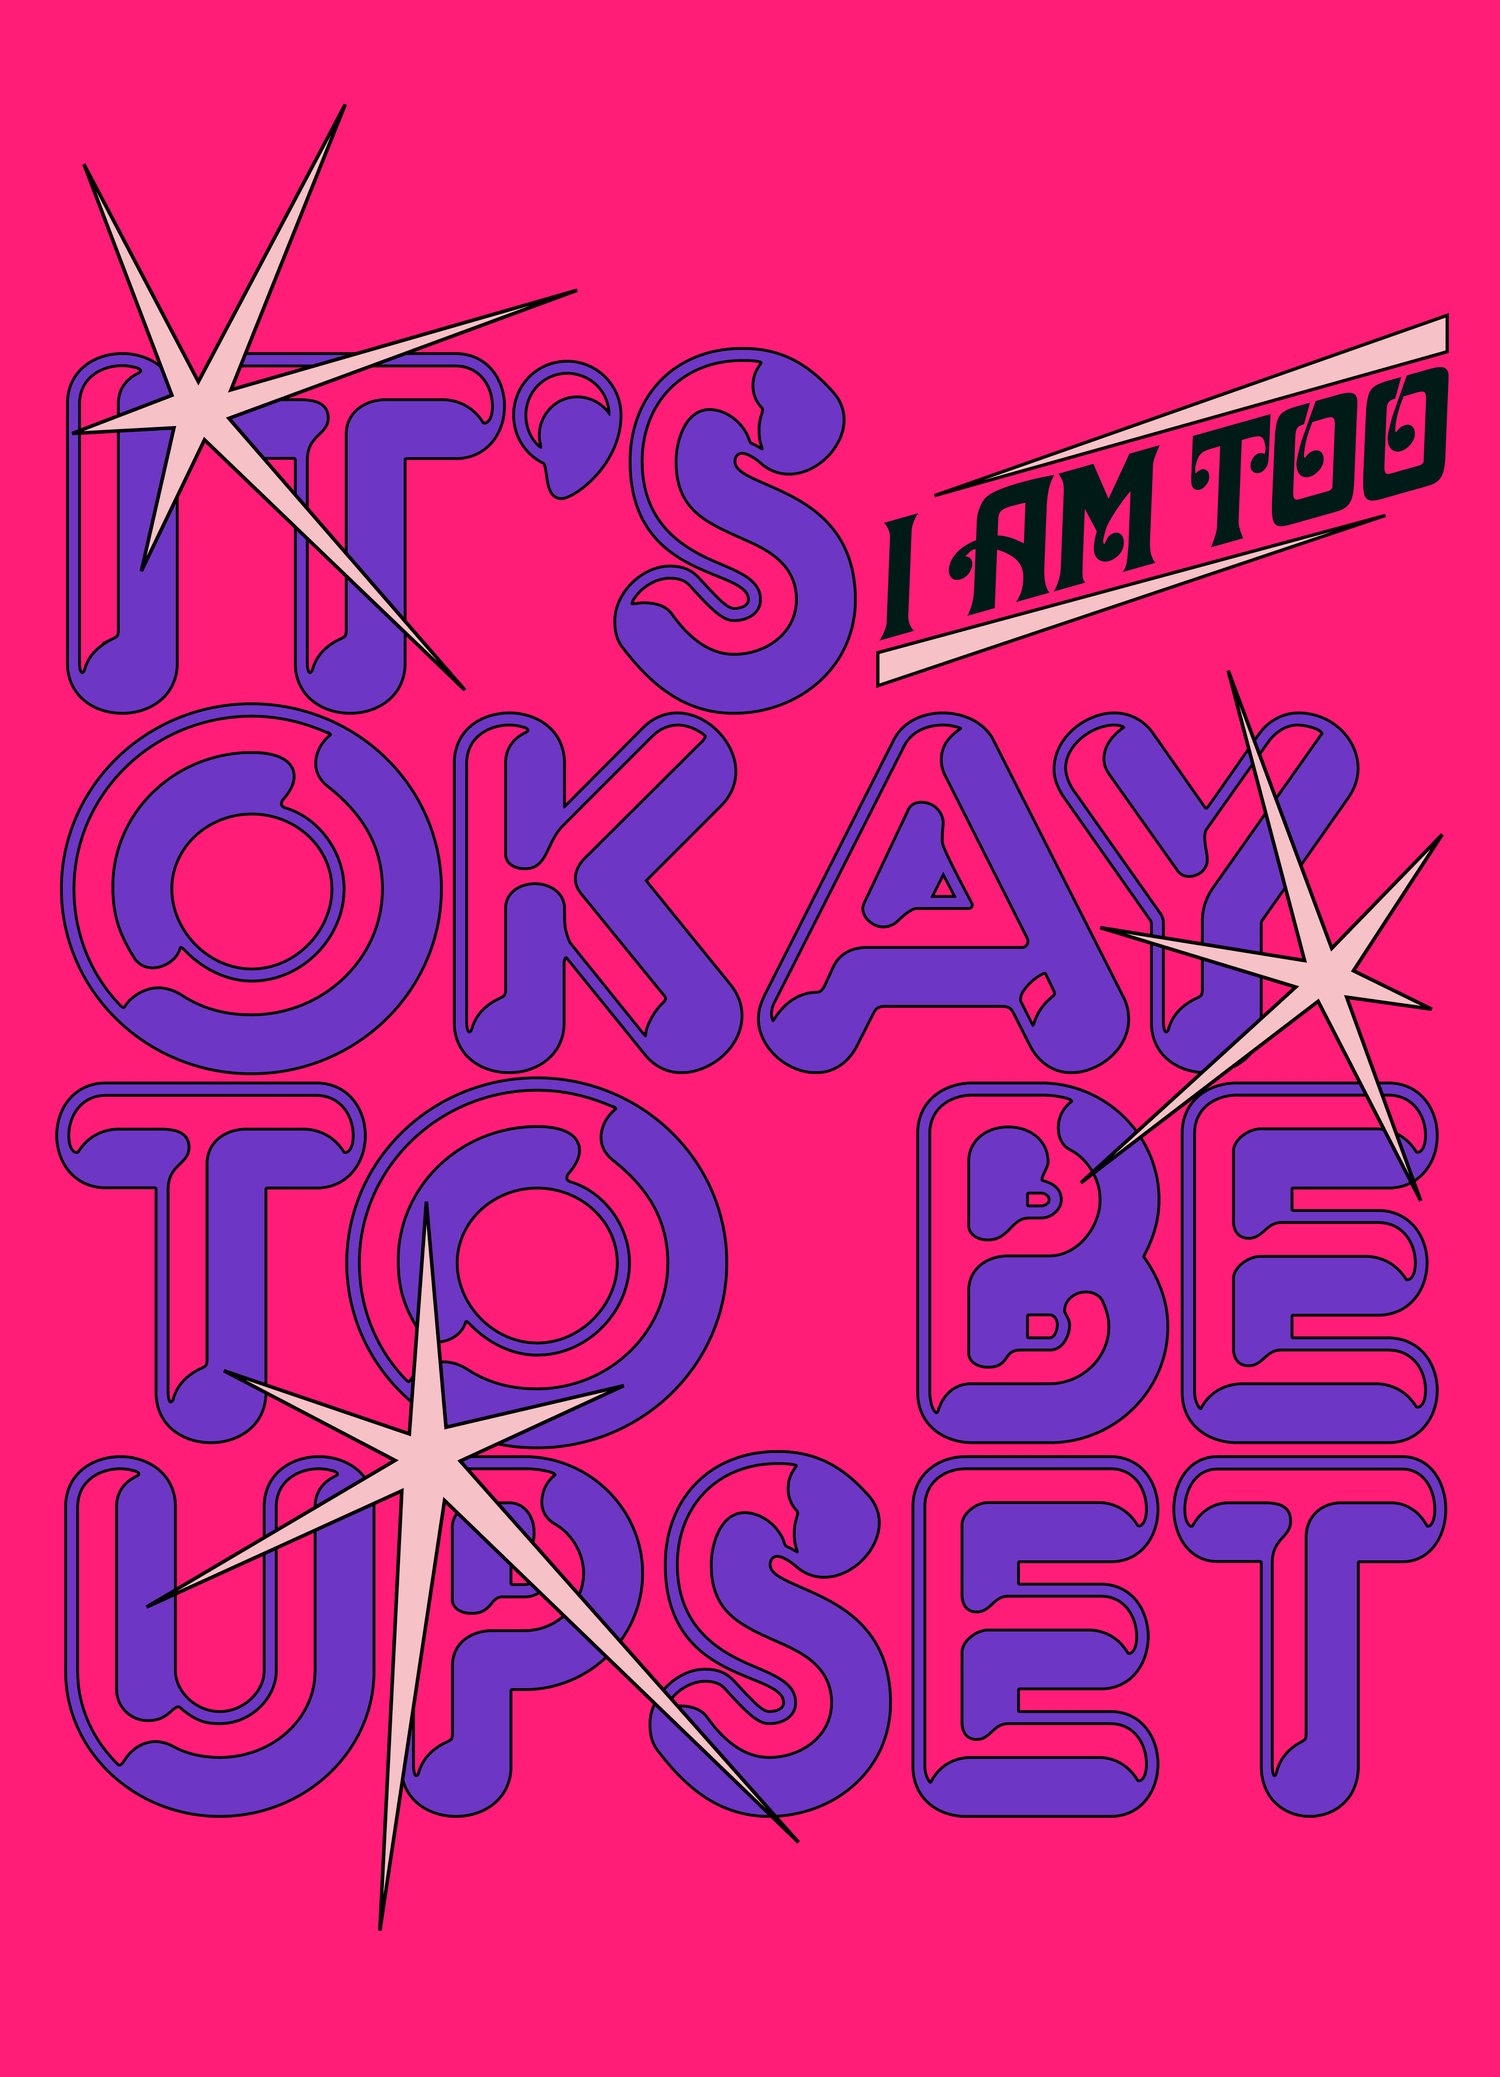 It's Okay to Be Upset - exhibition serie #5